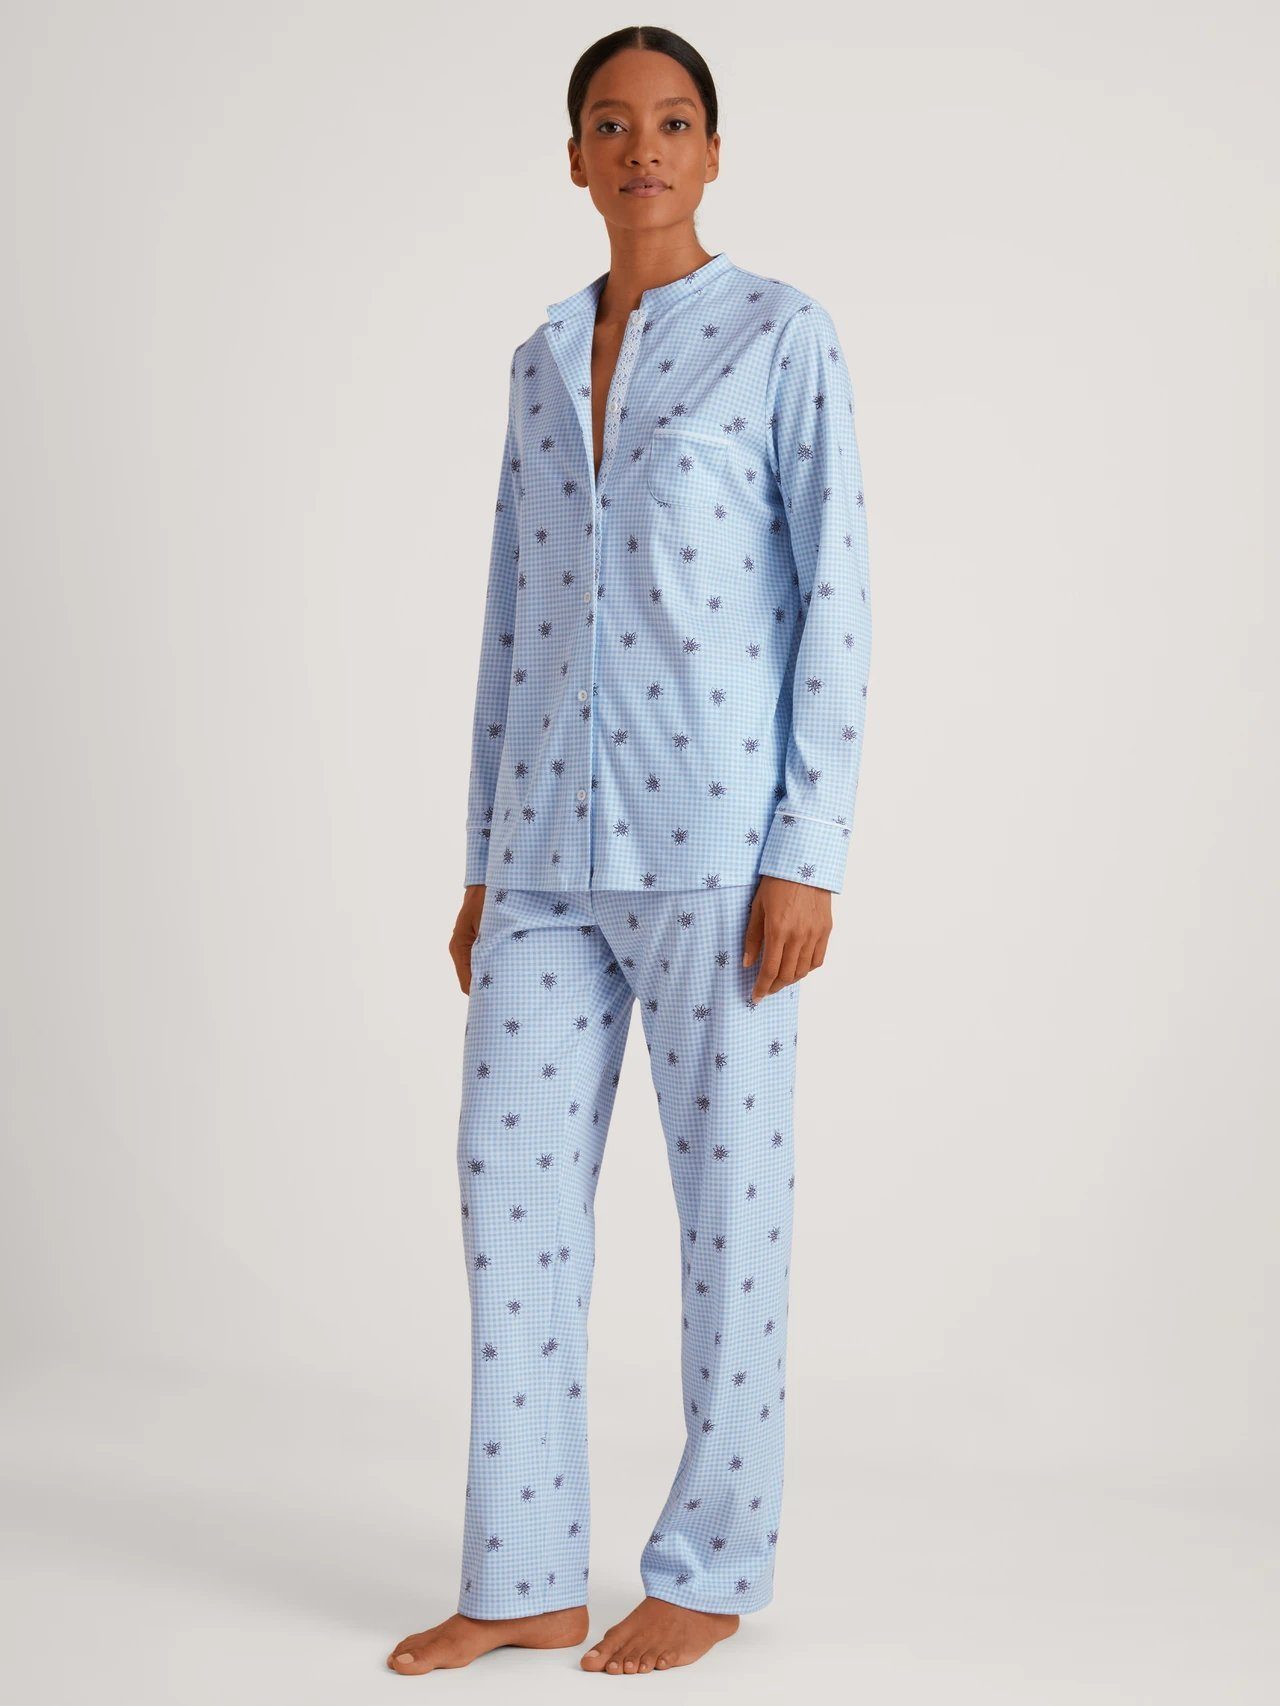 Solange der Vorrat reicht CALIDA Pyjama Calida Damenpyjama 44653 1 Stück, blue 1 Baumwolle placid tlg., % 100 (1 Stück)